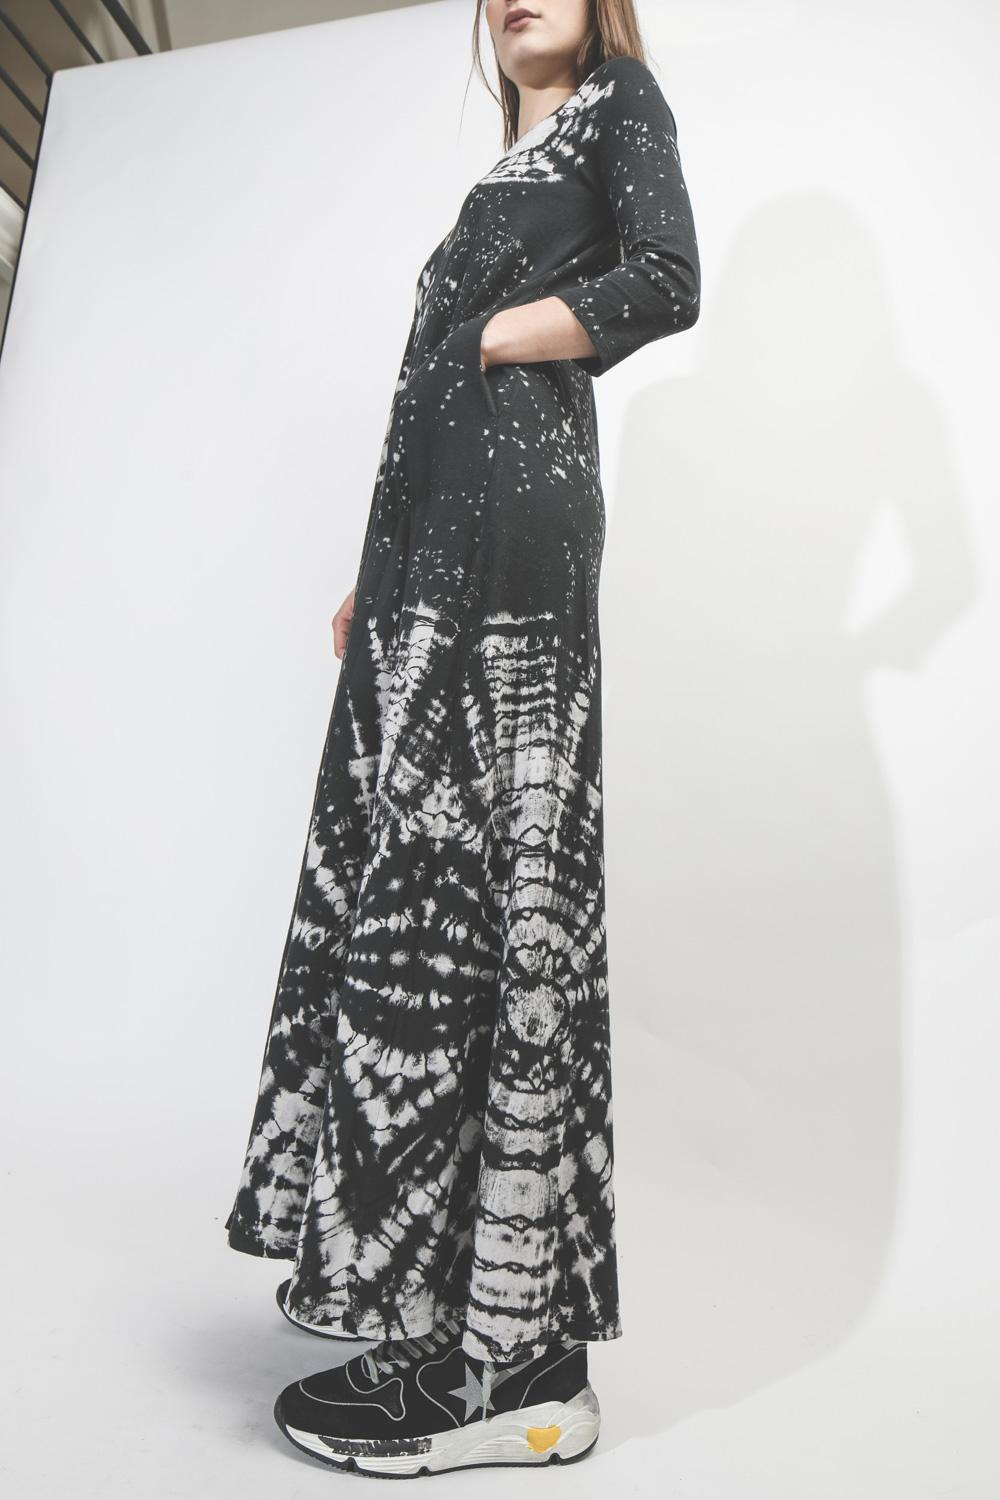 Raquel Allegra Half Sleeve Drama Maxi Dress - Black Constellation Tie Dye  